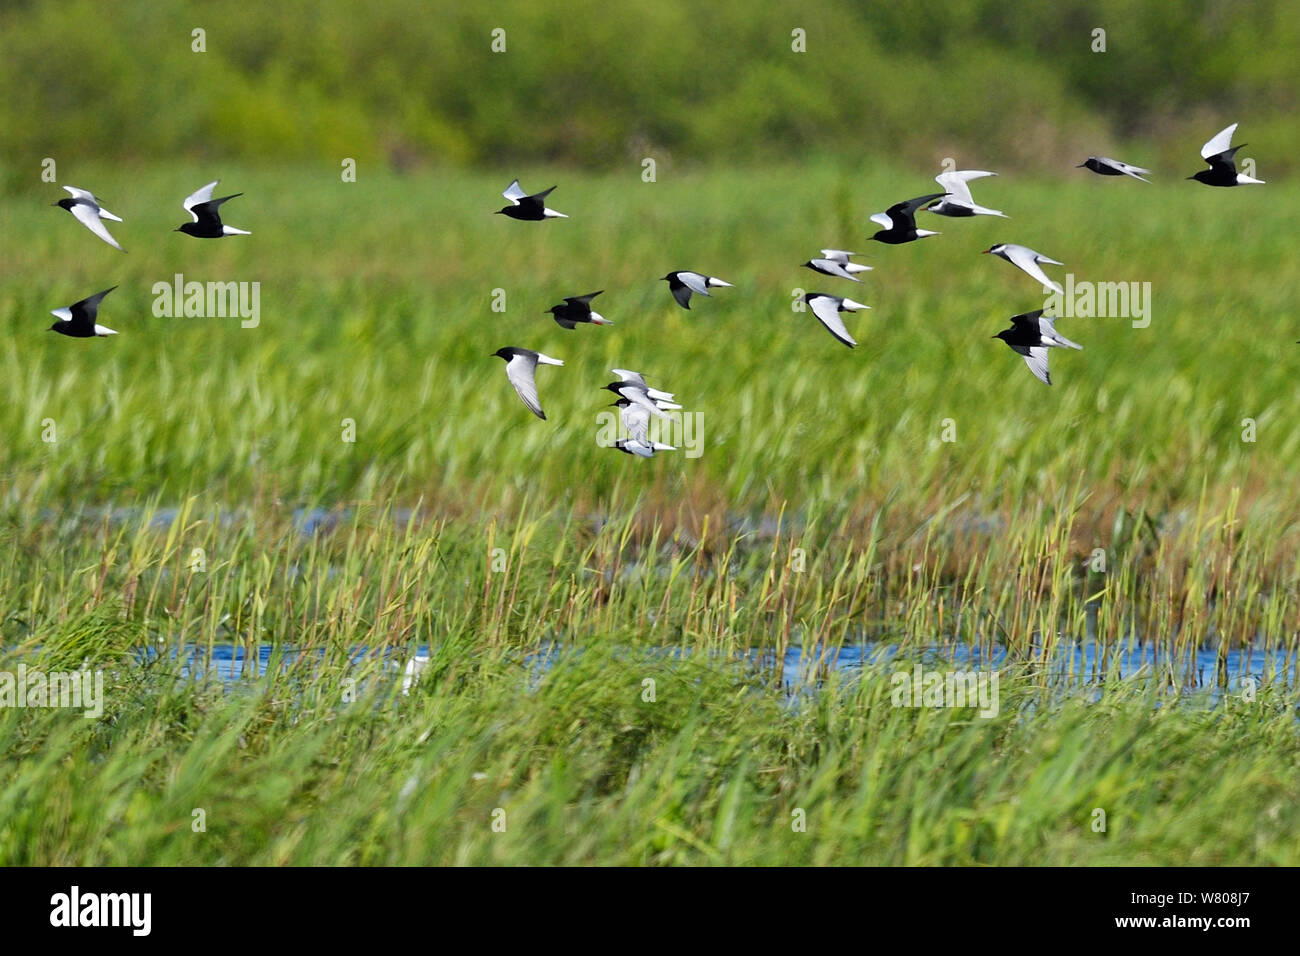 Mixed flock of White-winged black tern (Chlidonias leucopterus), Black tern (Chlidonias niger) and Whiskered tern (Chlidonias hybrida) Nemunas River Delta, Lithuania, May. Stock Photo